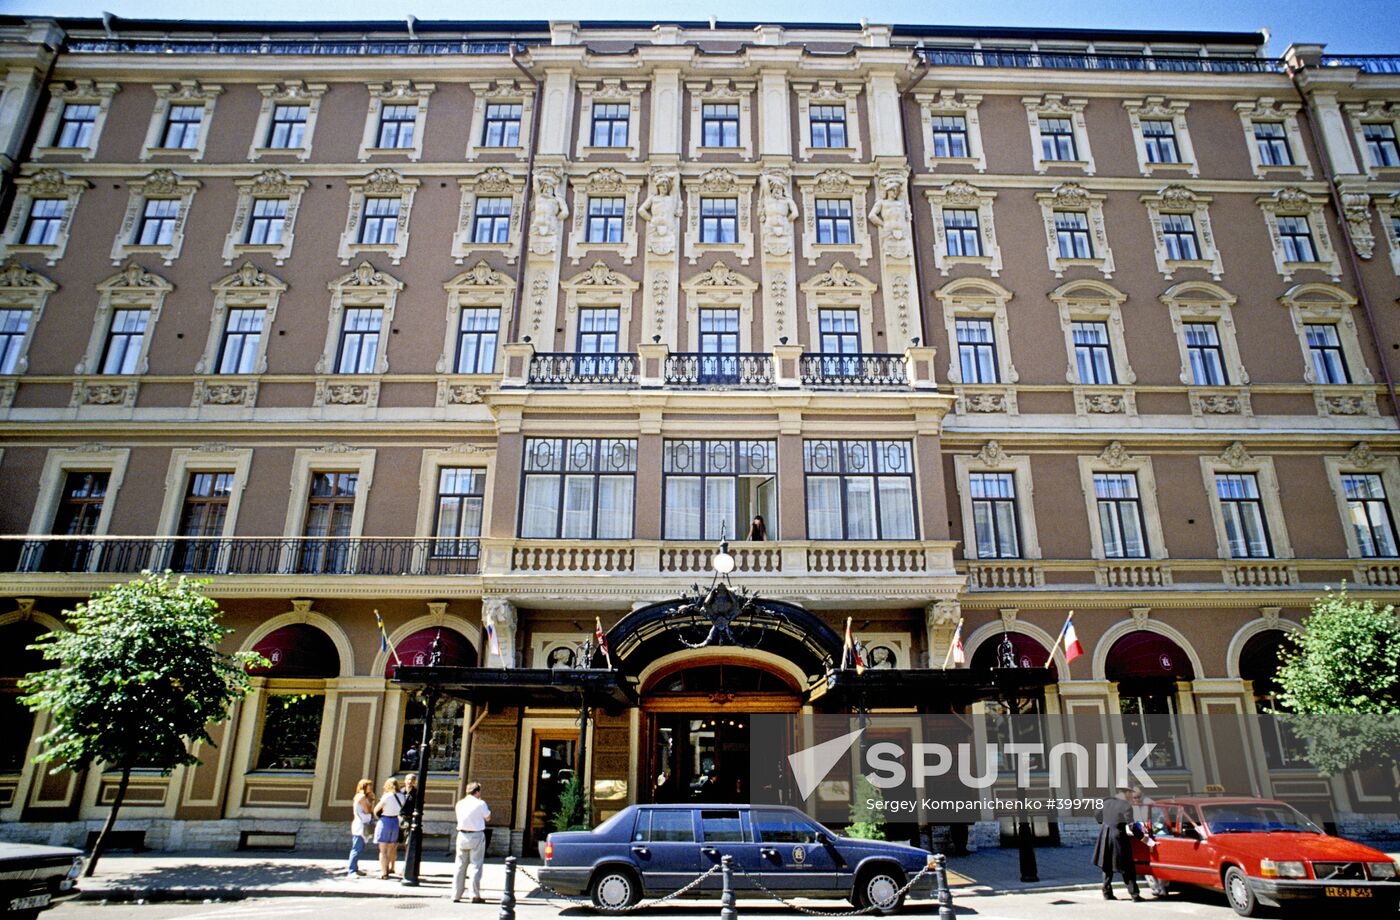 Europa Grand Hotel in St. Petersburg